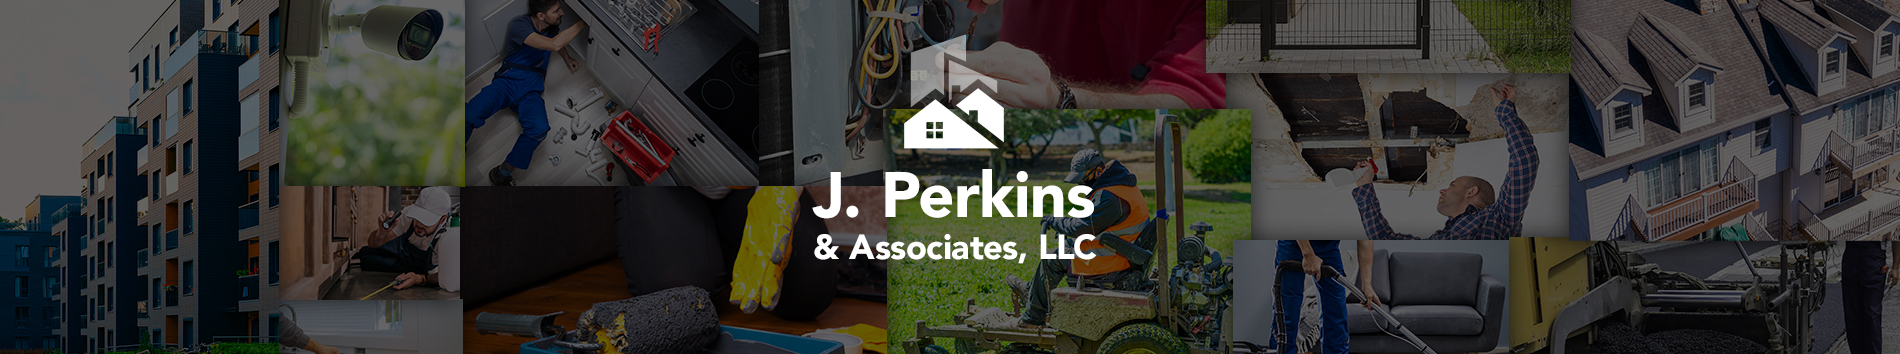 J. Perkins & Associates, LLC